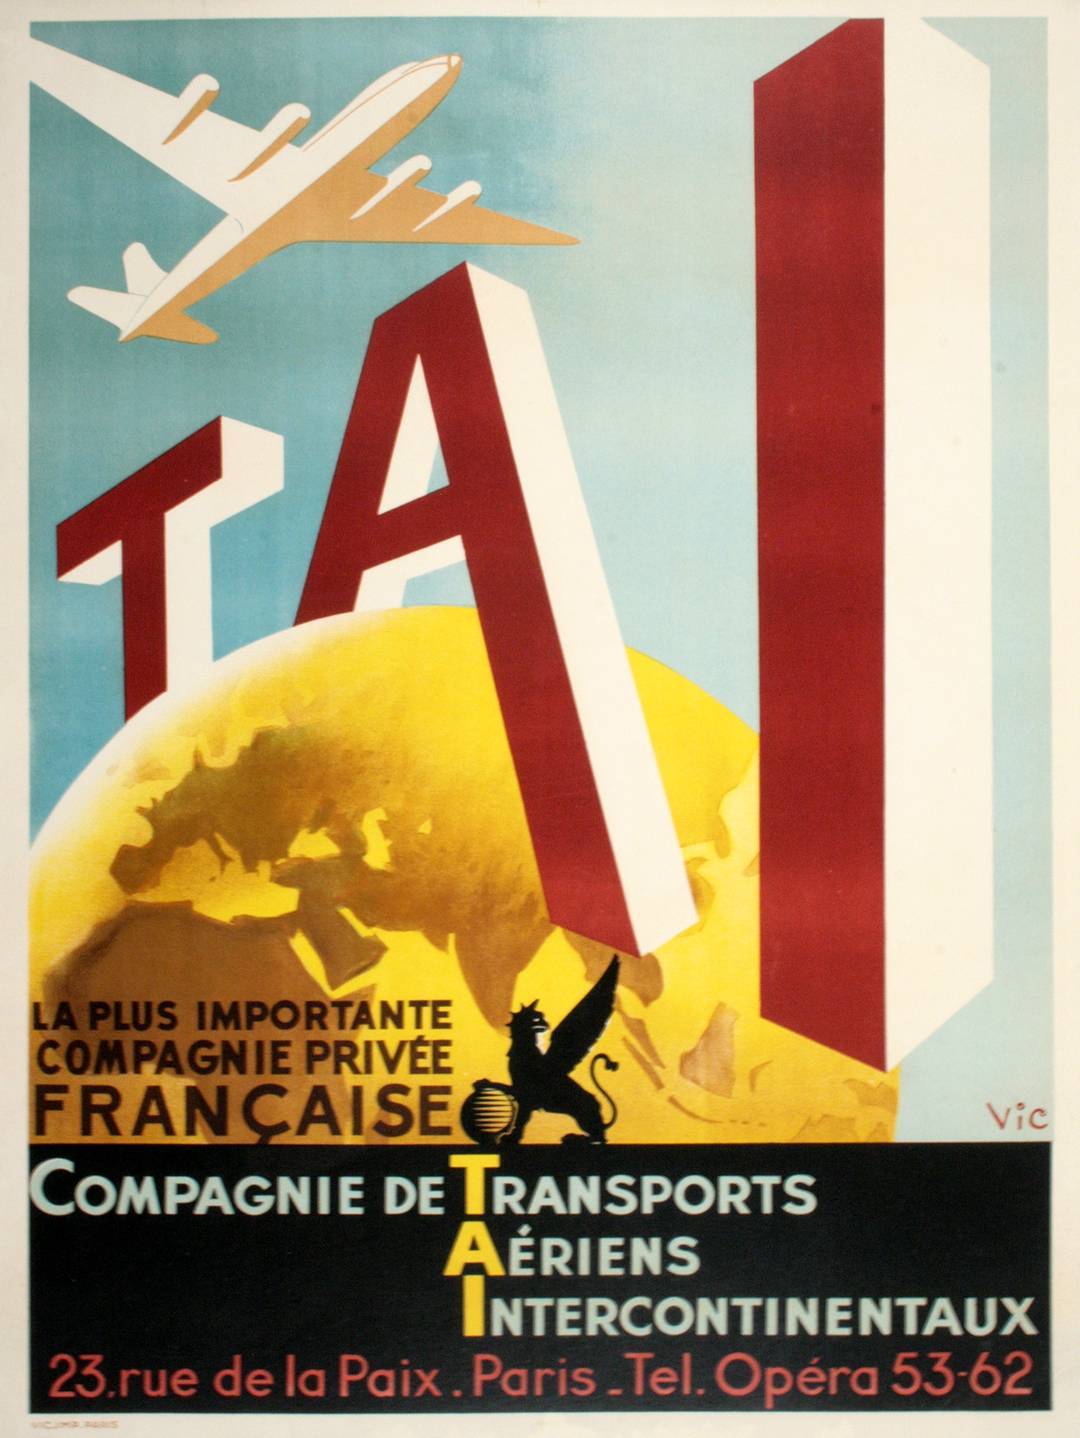 Original TAI - La Plus Importante Airline French Poster c1950 by Vic